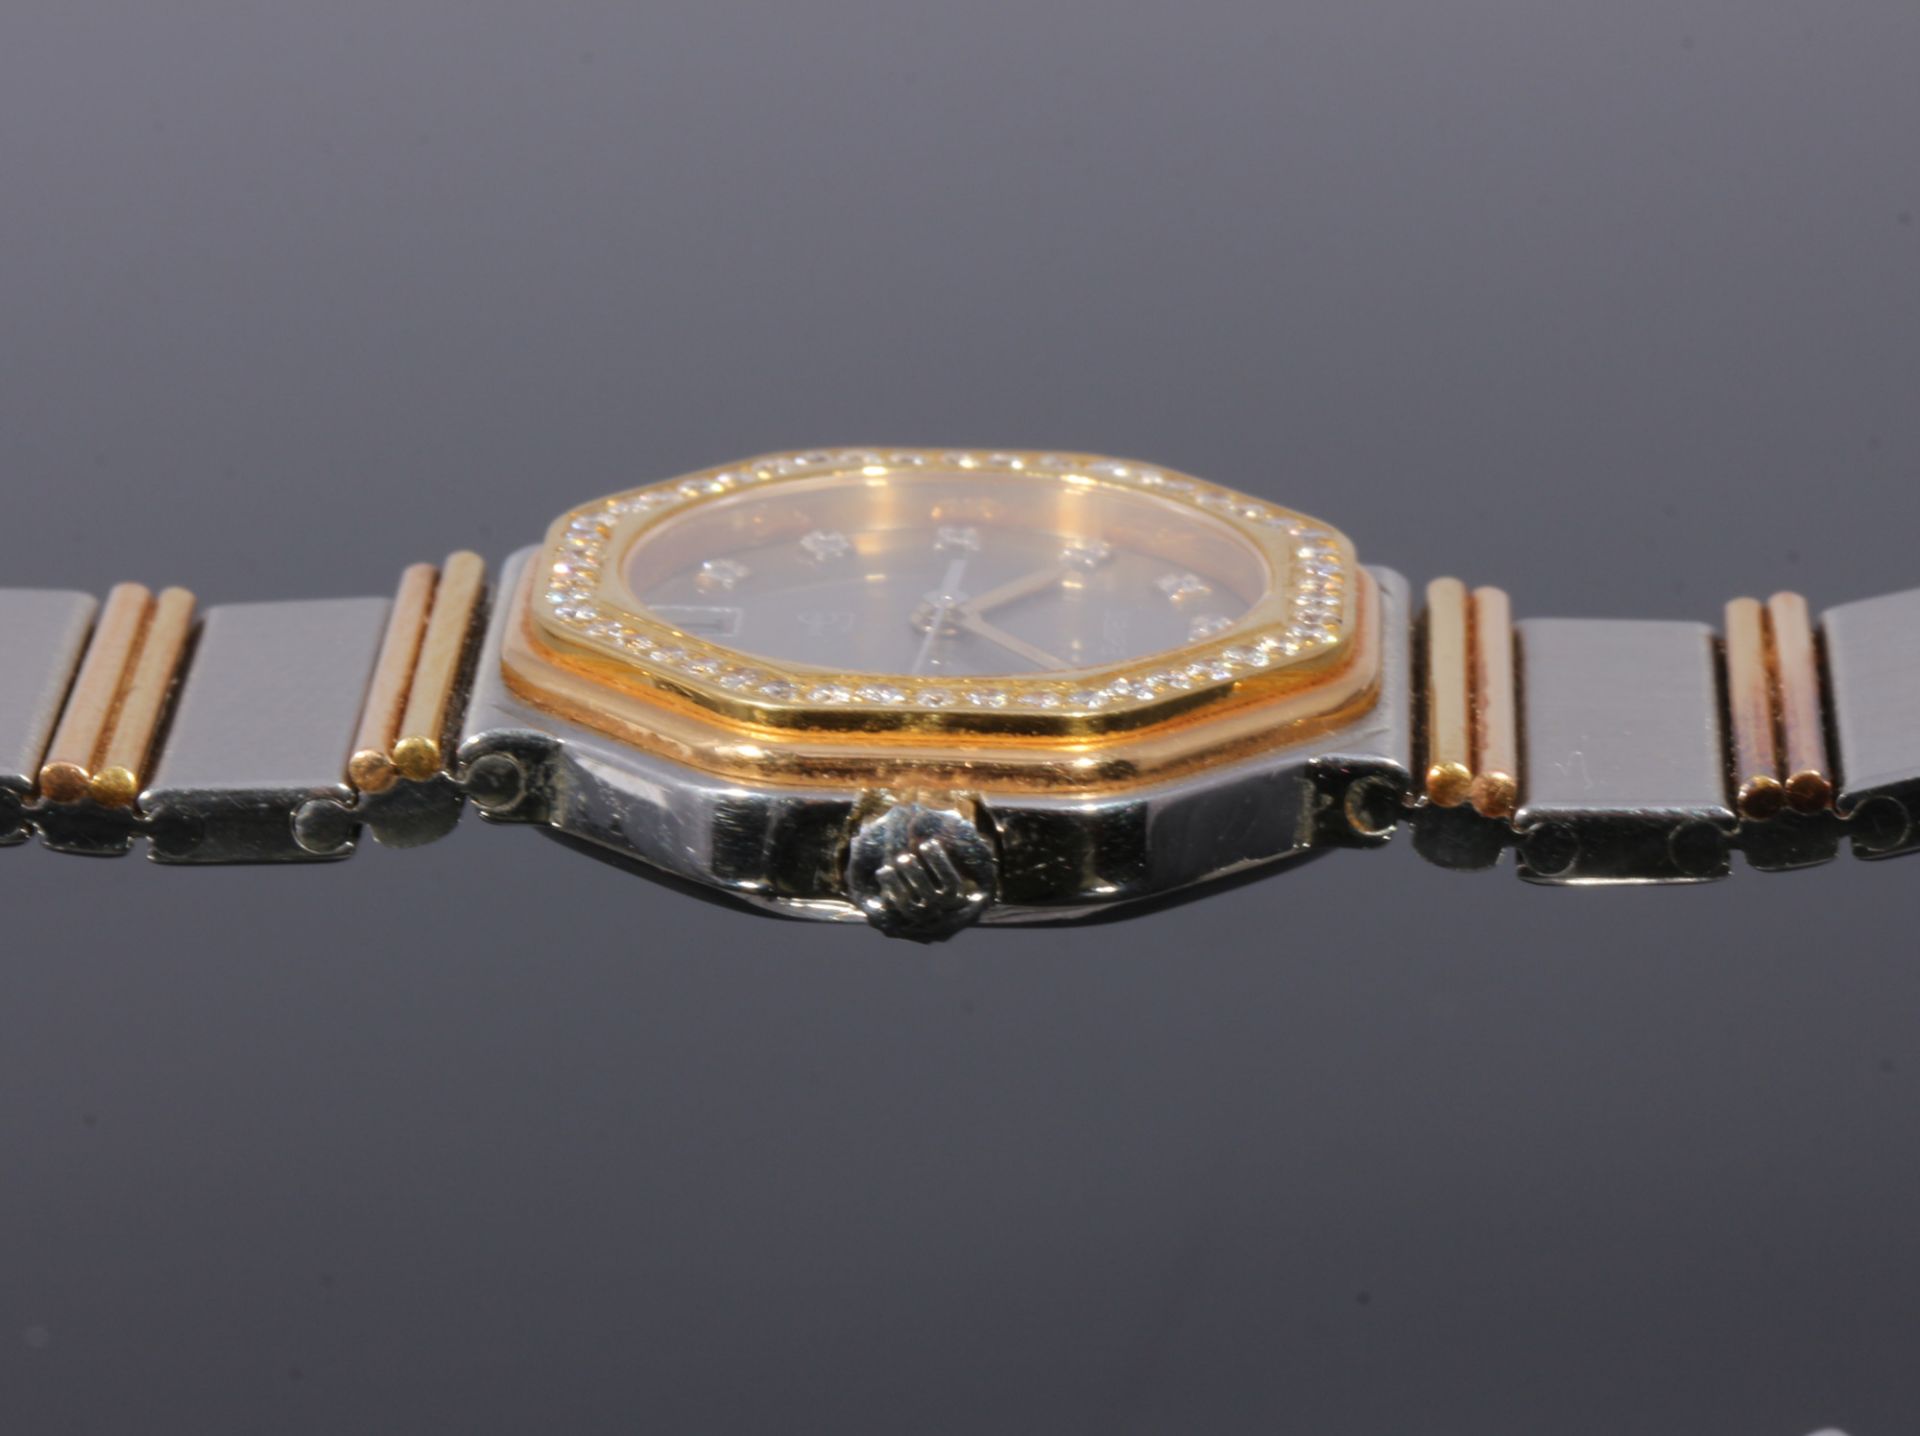 Wempe 5th Avenue Damen Armbanduhr mit Brillanten, ladies wrist watch with diamonds, - Image 4 of 5